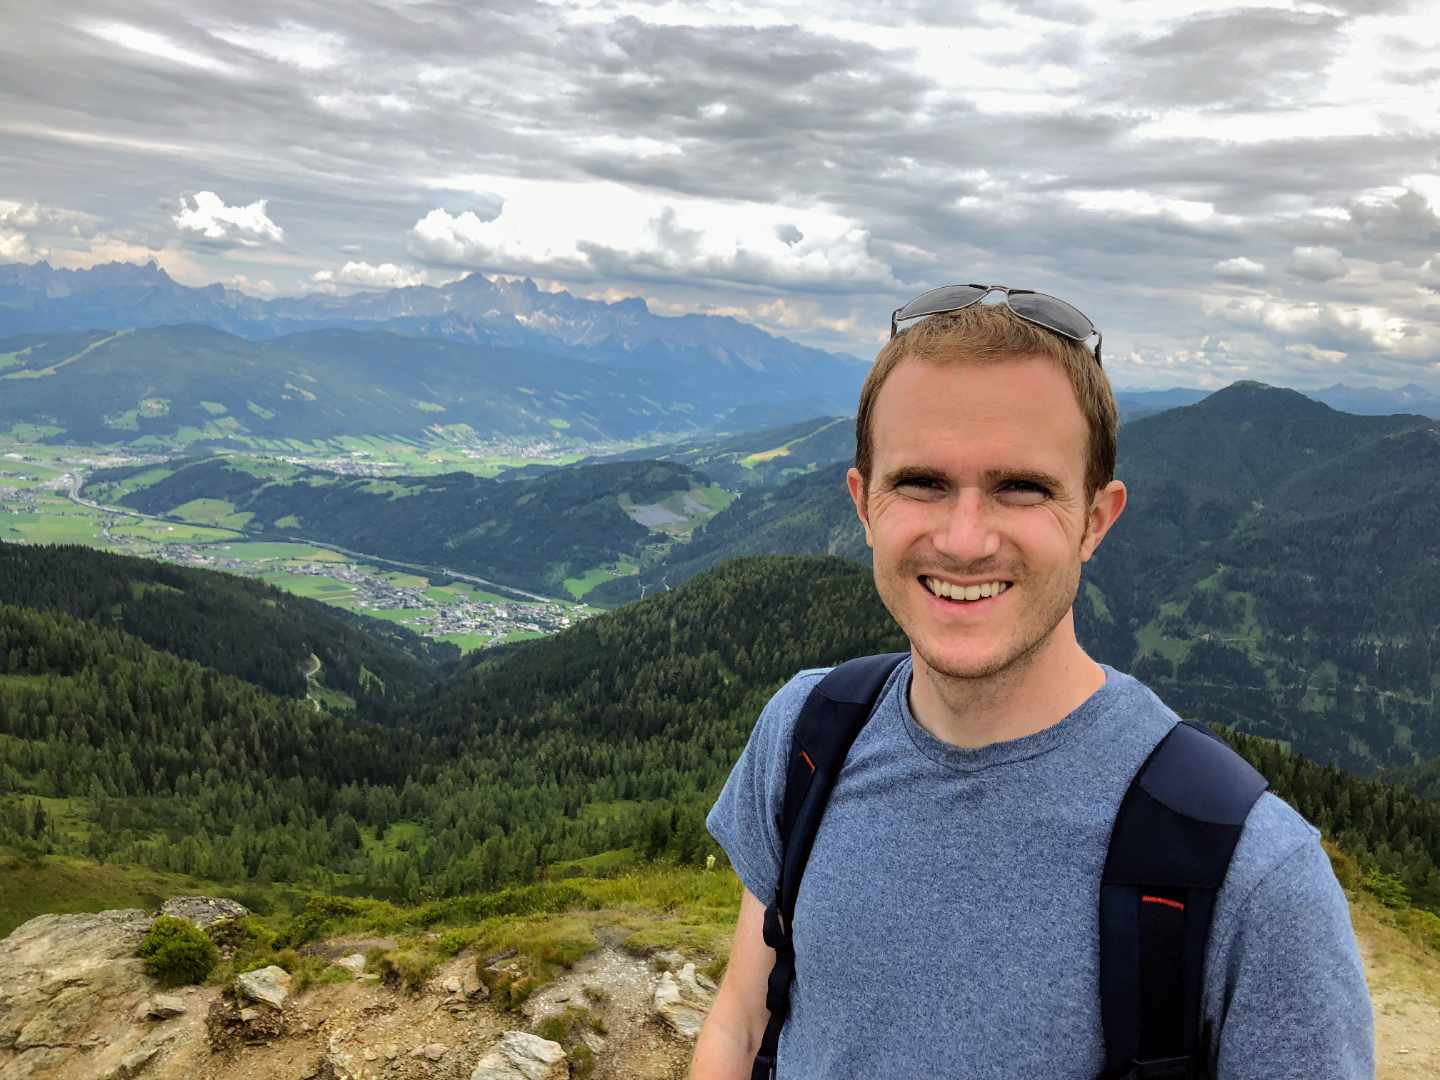 Brad on an Austrian alp mountain wearing a backpack 